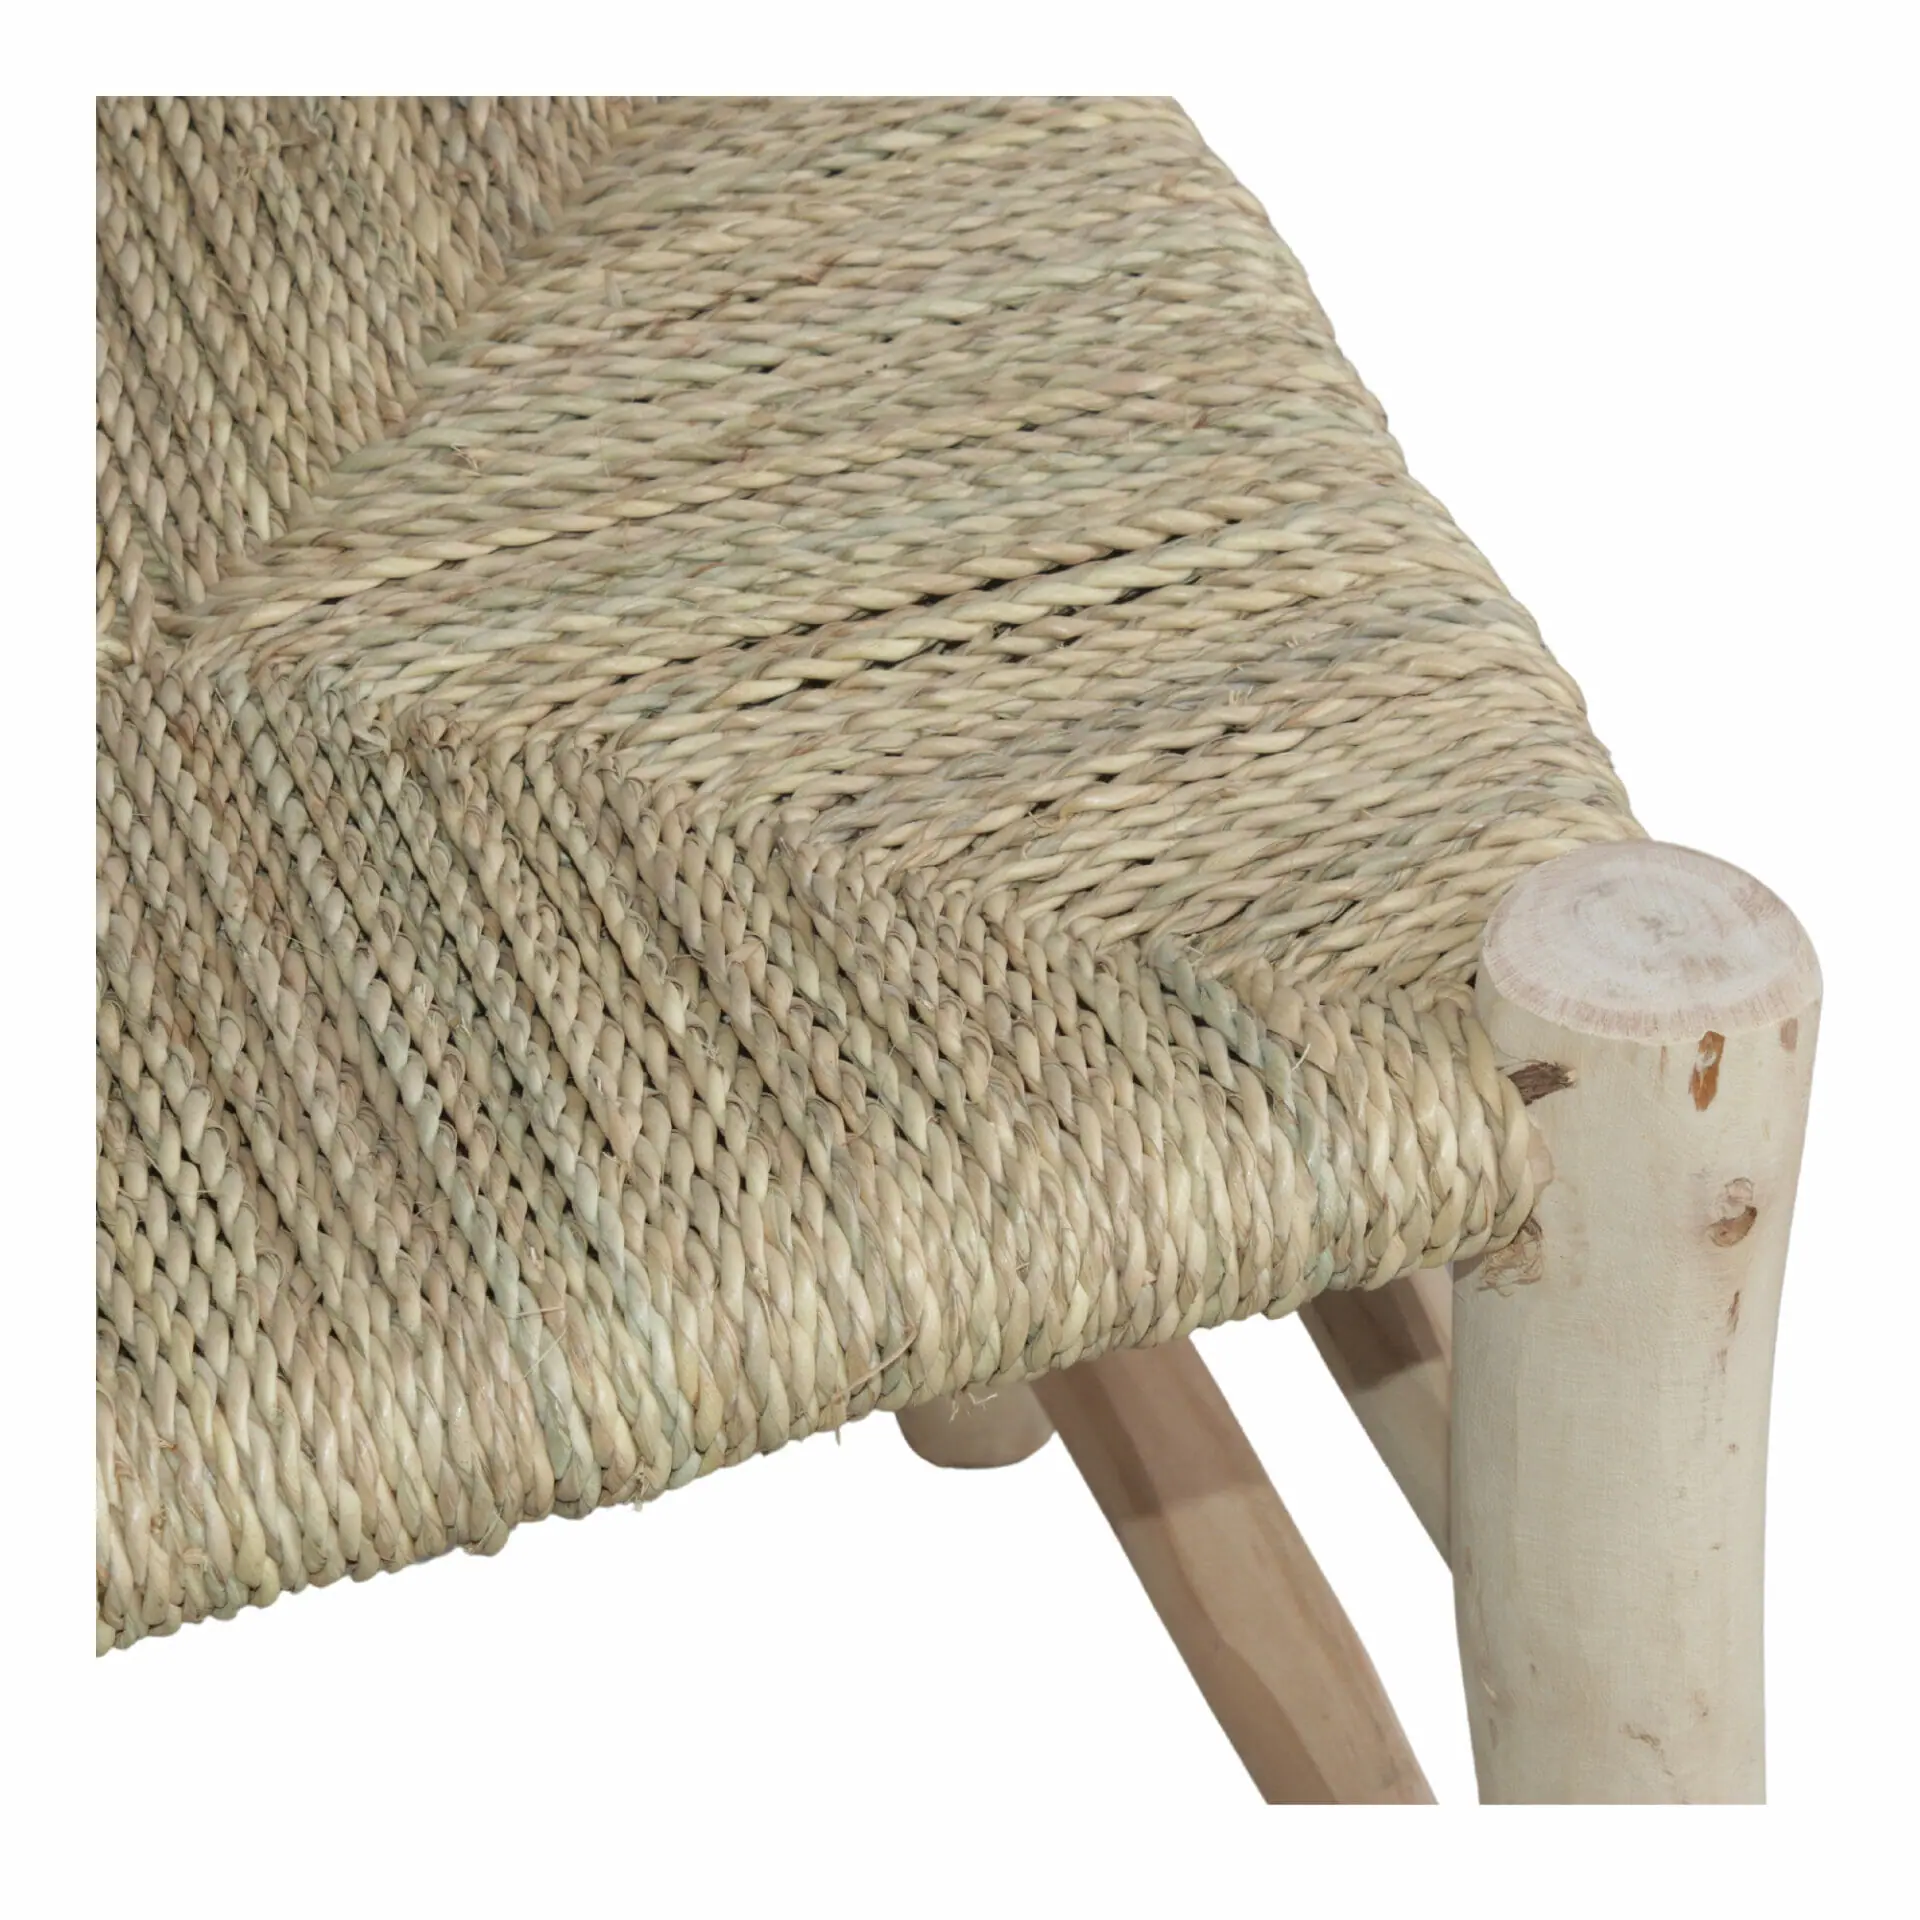 85014-85011-kandice-stools